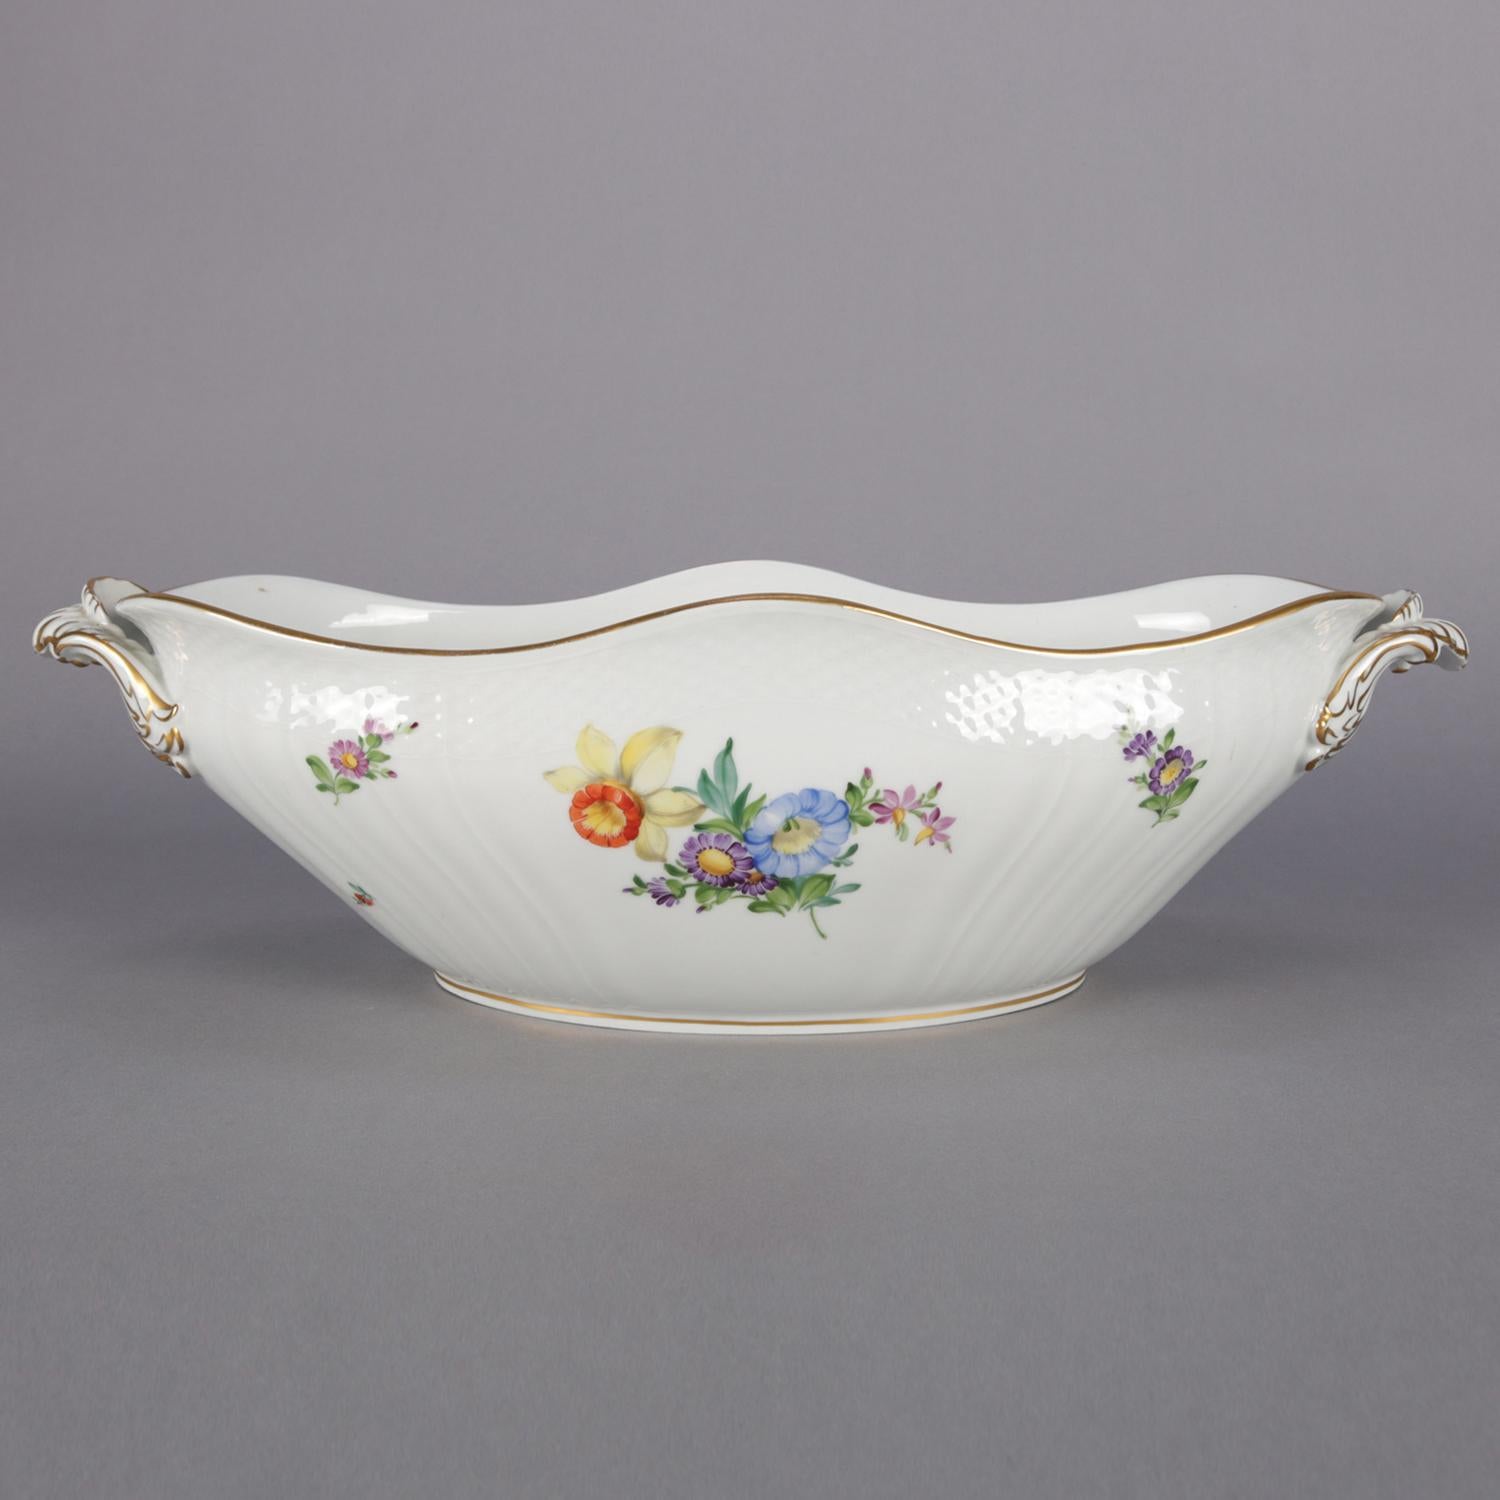 20th Century Danish Hand Painted and Gilt Floral Royal Copenhagen Porcelain Center Bowl